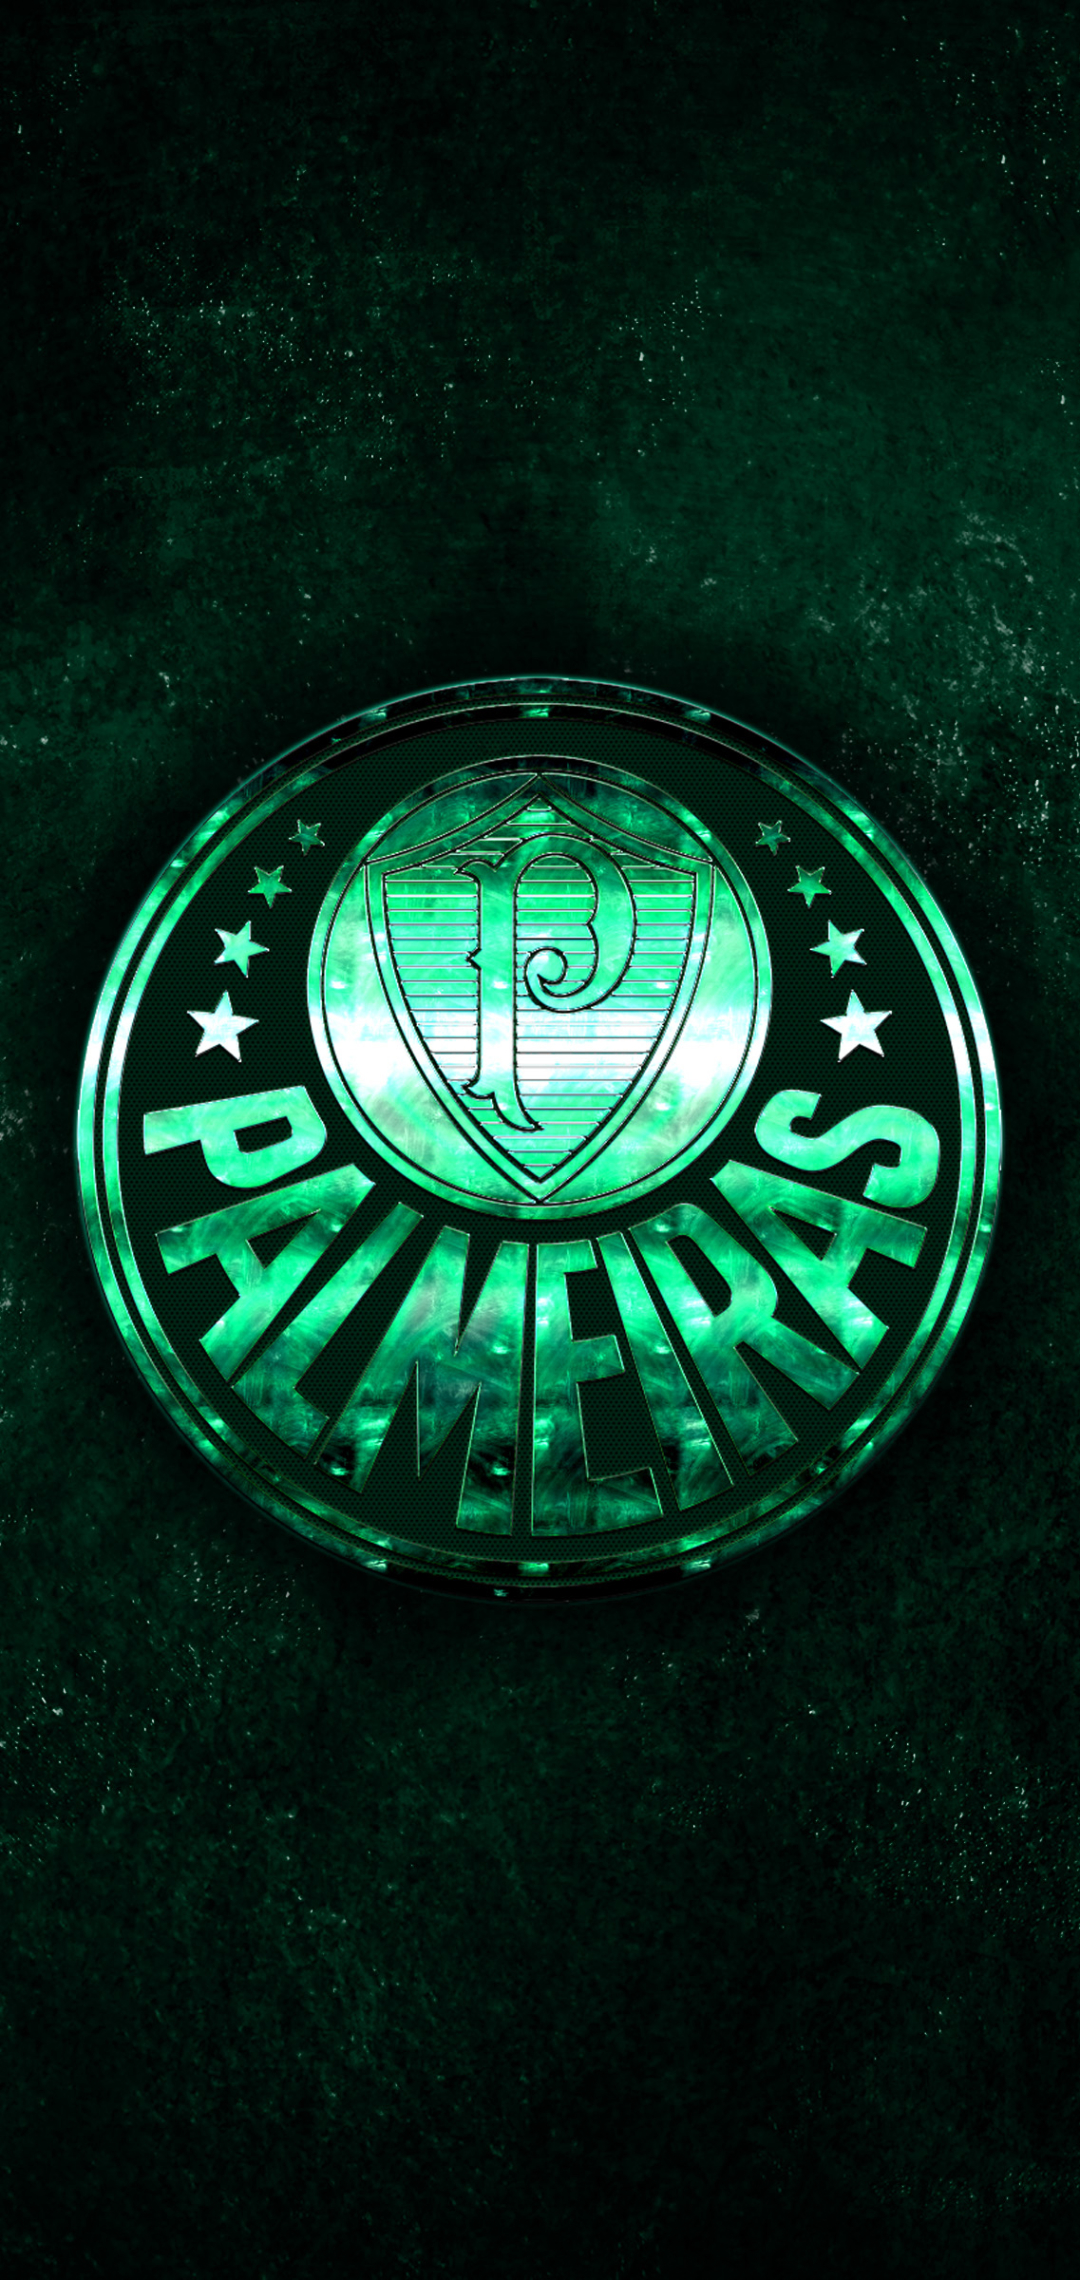 Baixar papel de parede para celular de Esportes, Futebol, Logotipo, Emblema, Sociedade Esportiva Palmeiras gratuito.